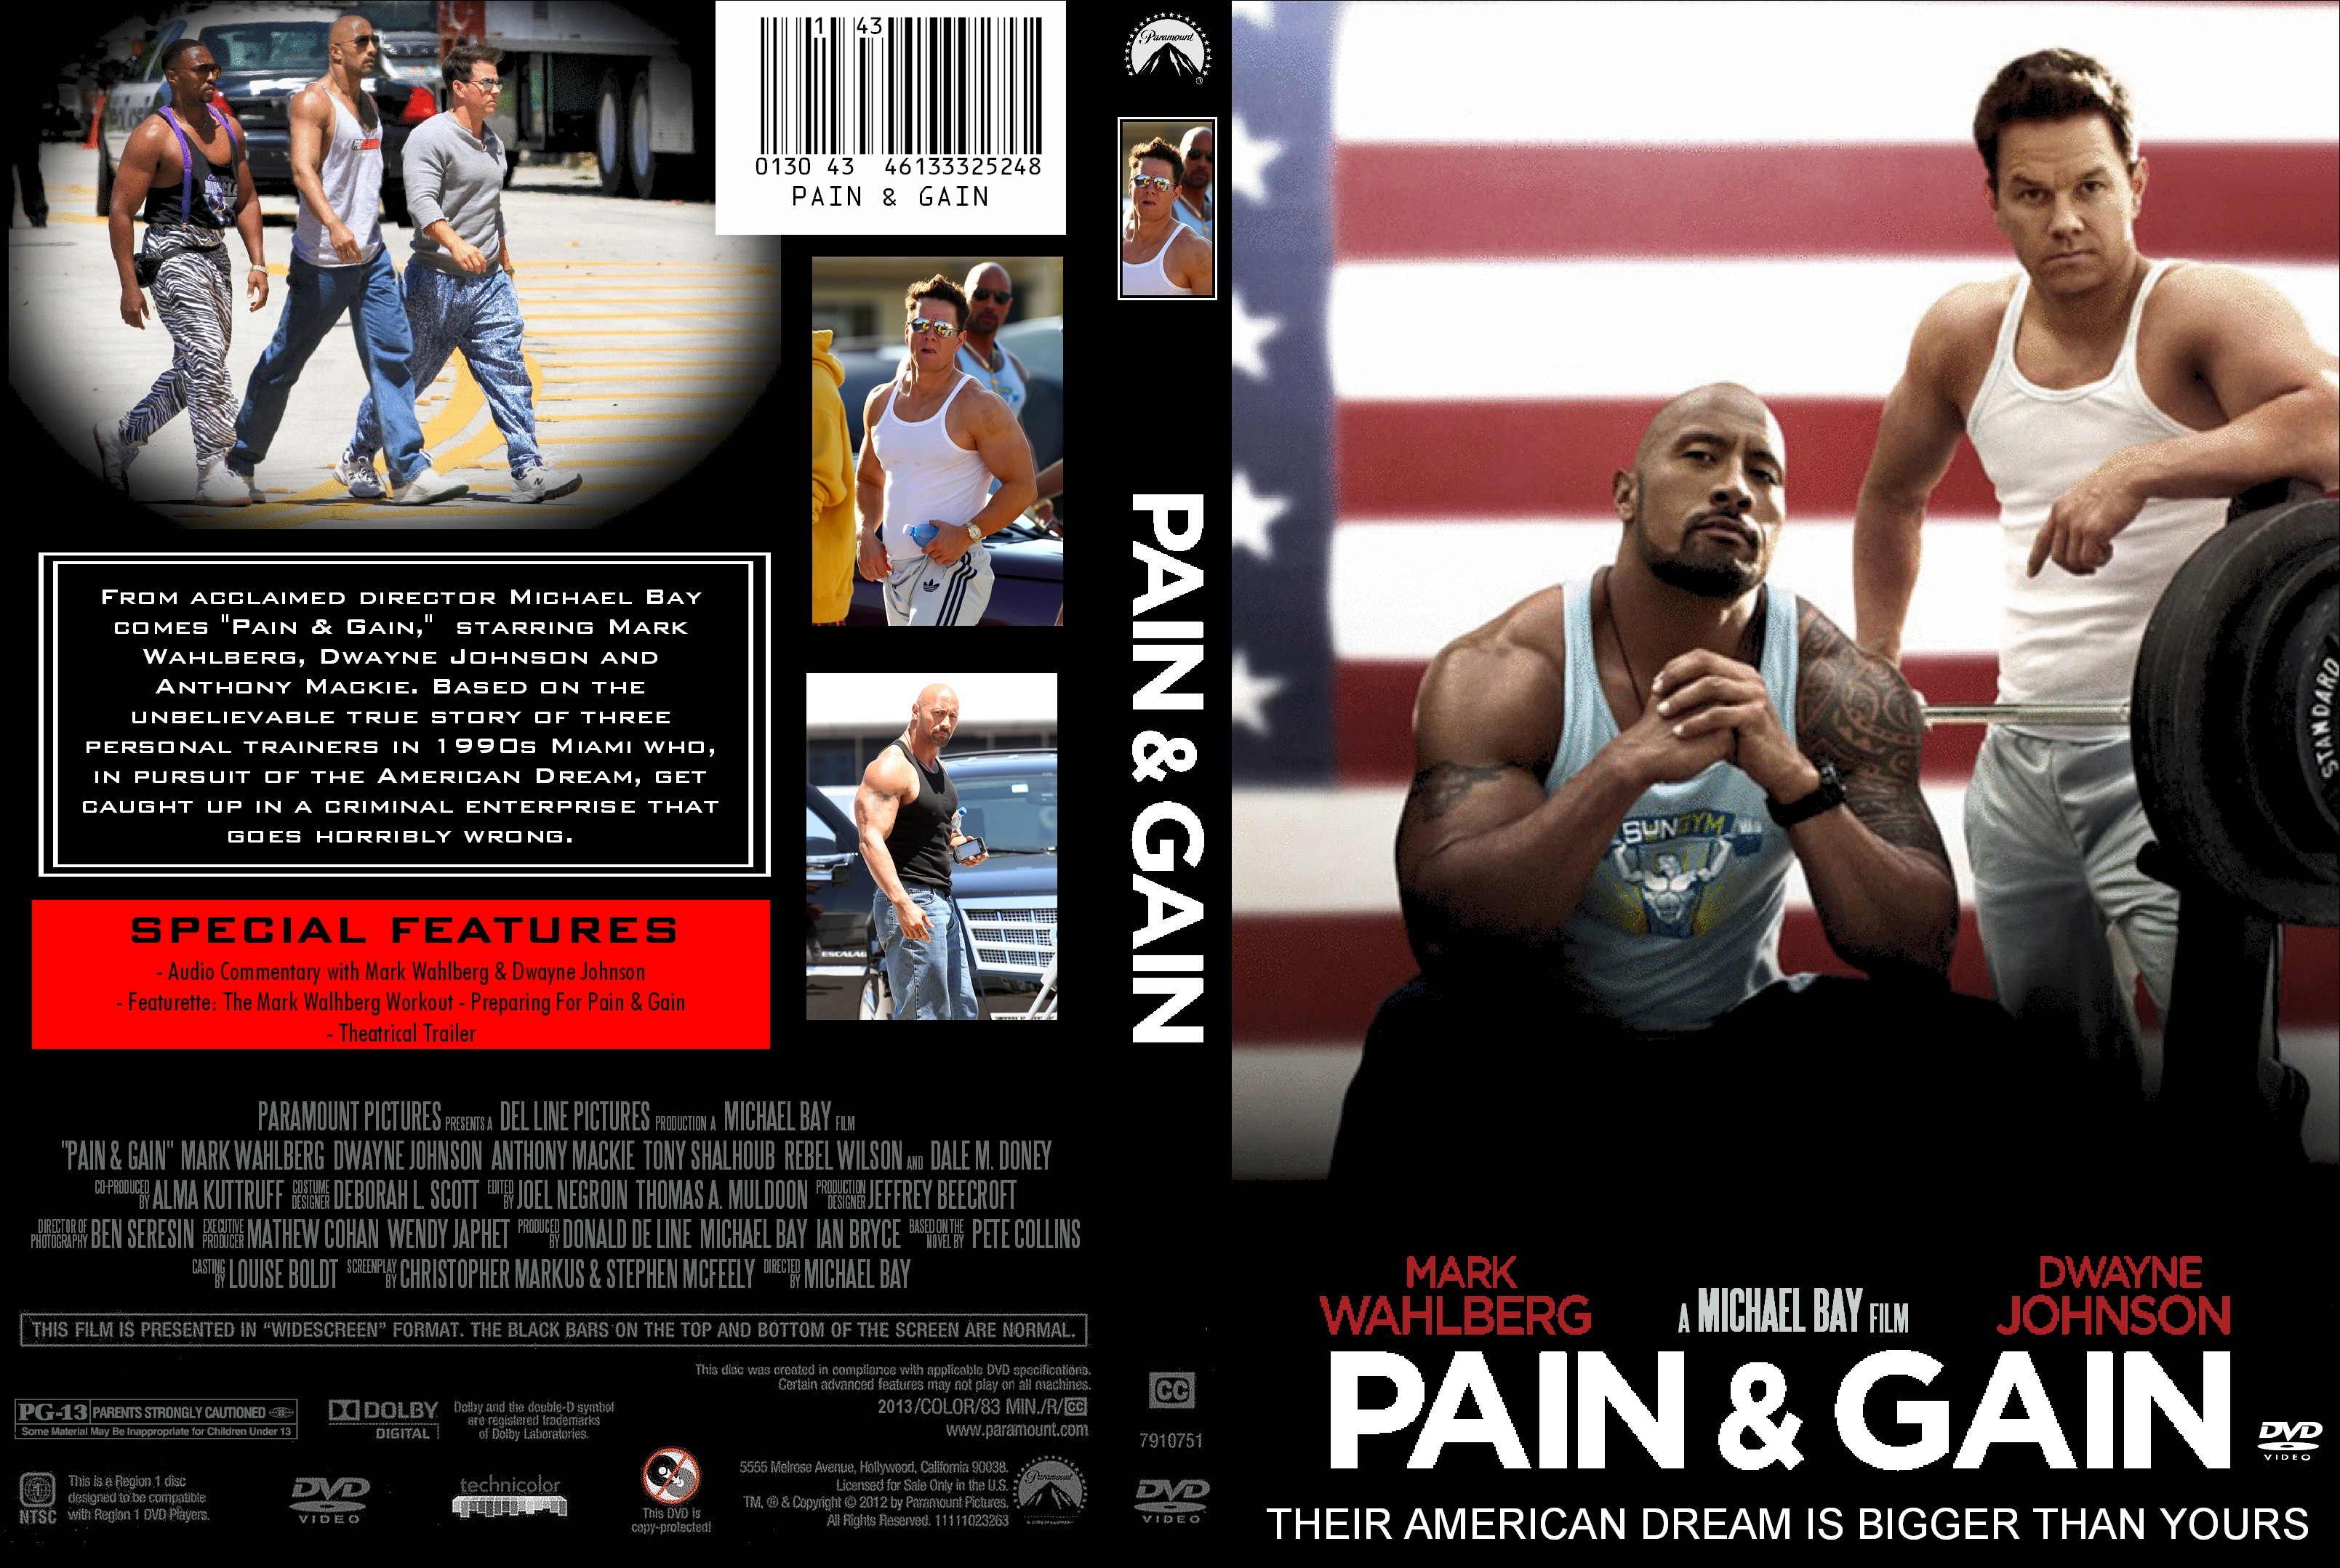 Pain gain fan compilation